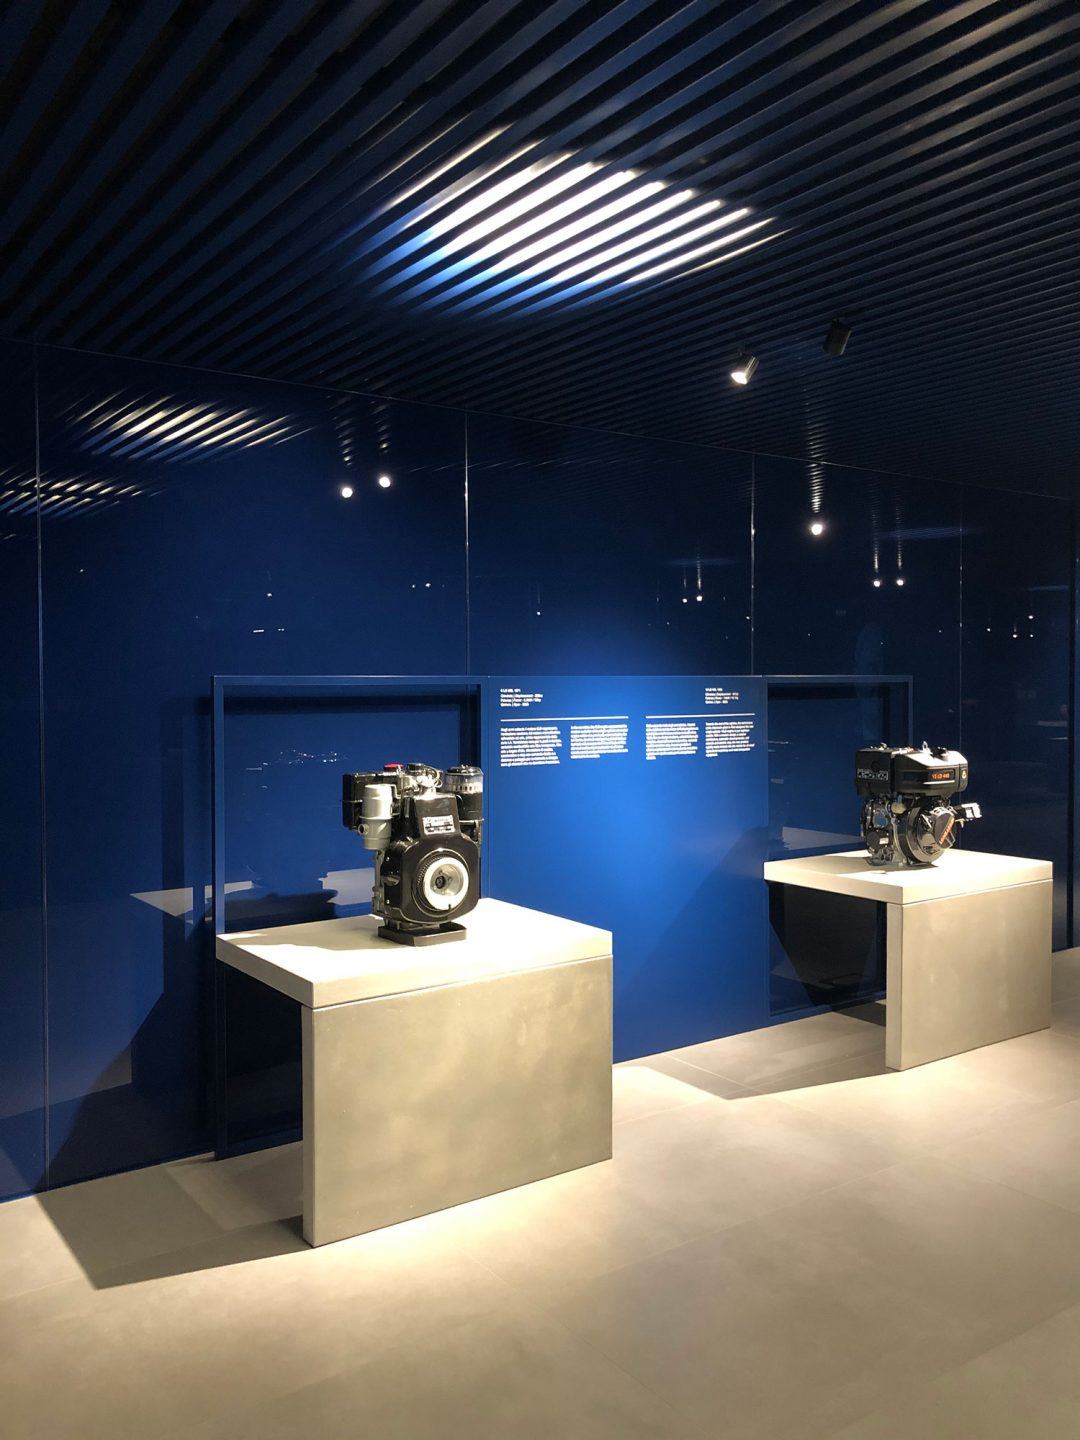 Gallery of Engines – Kohler Engines